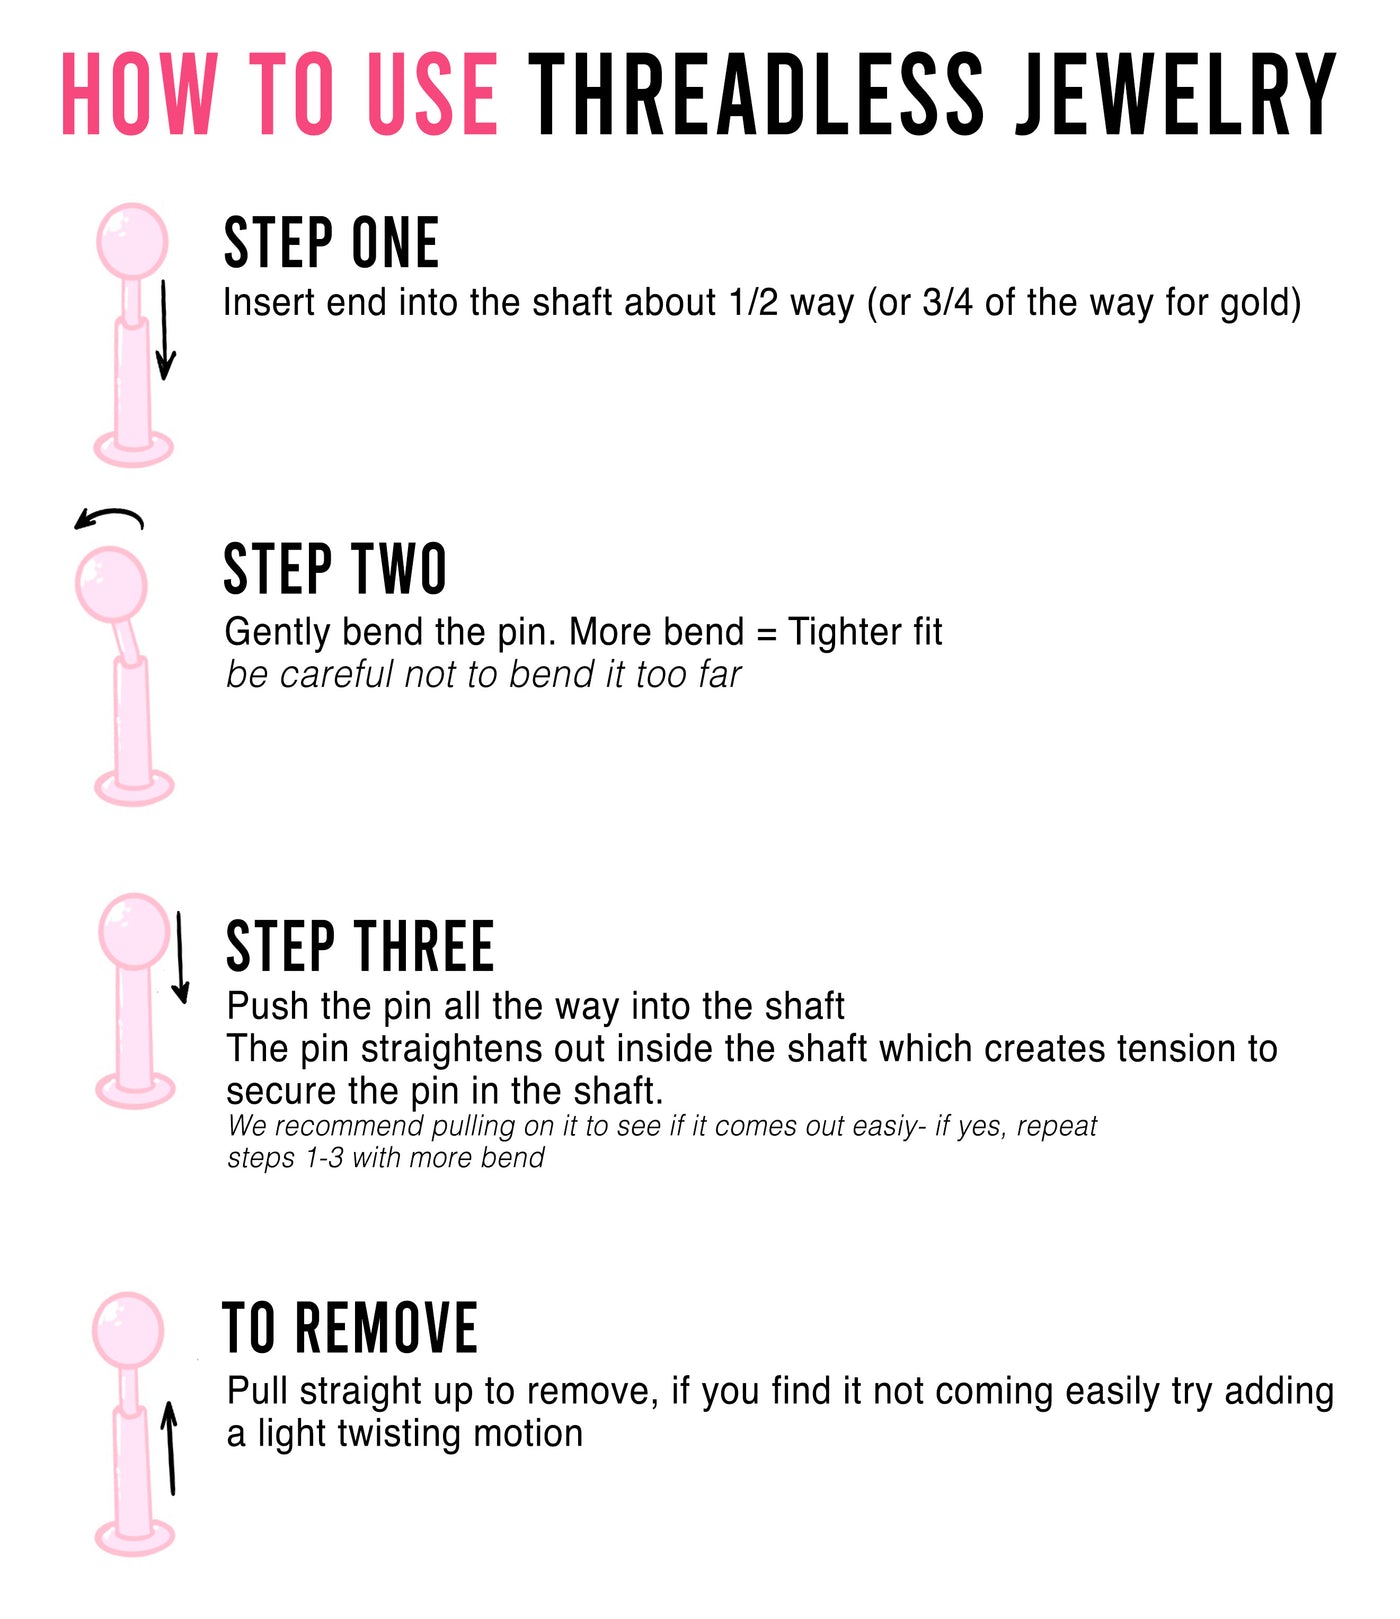 instructions on threadless jewellery use